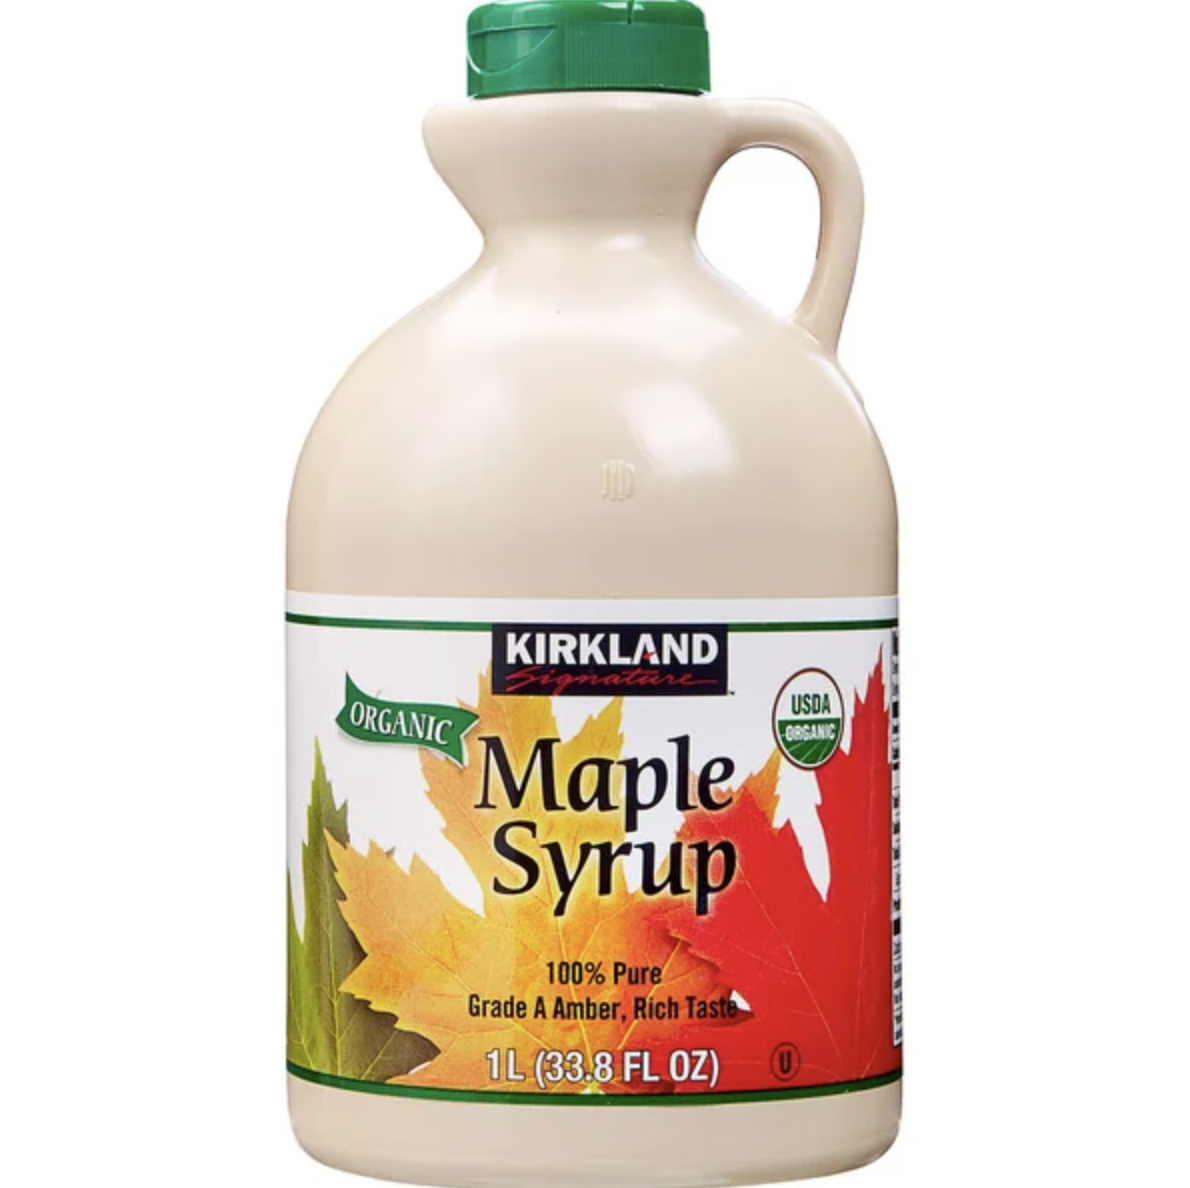 Kirkland Maple Syrup